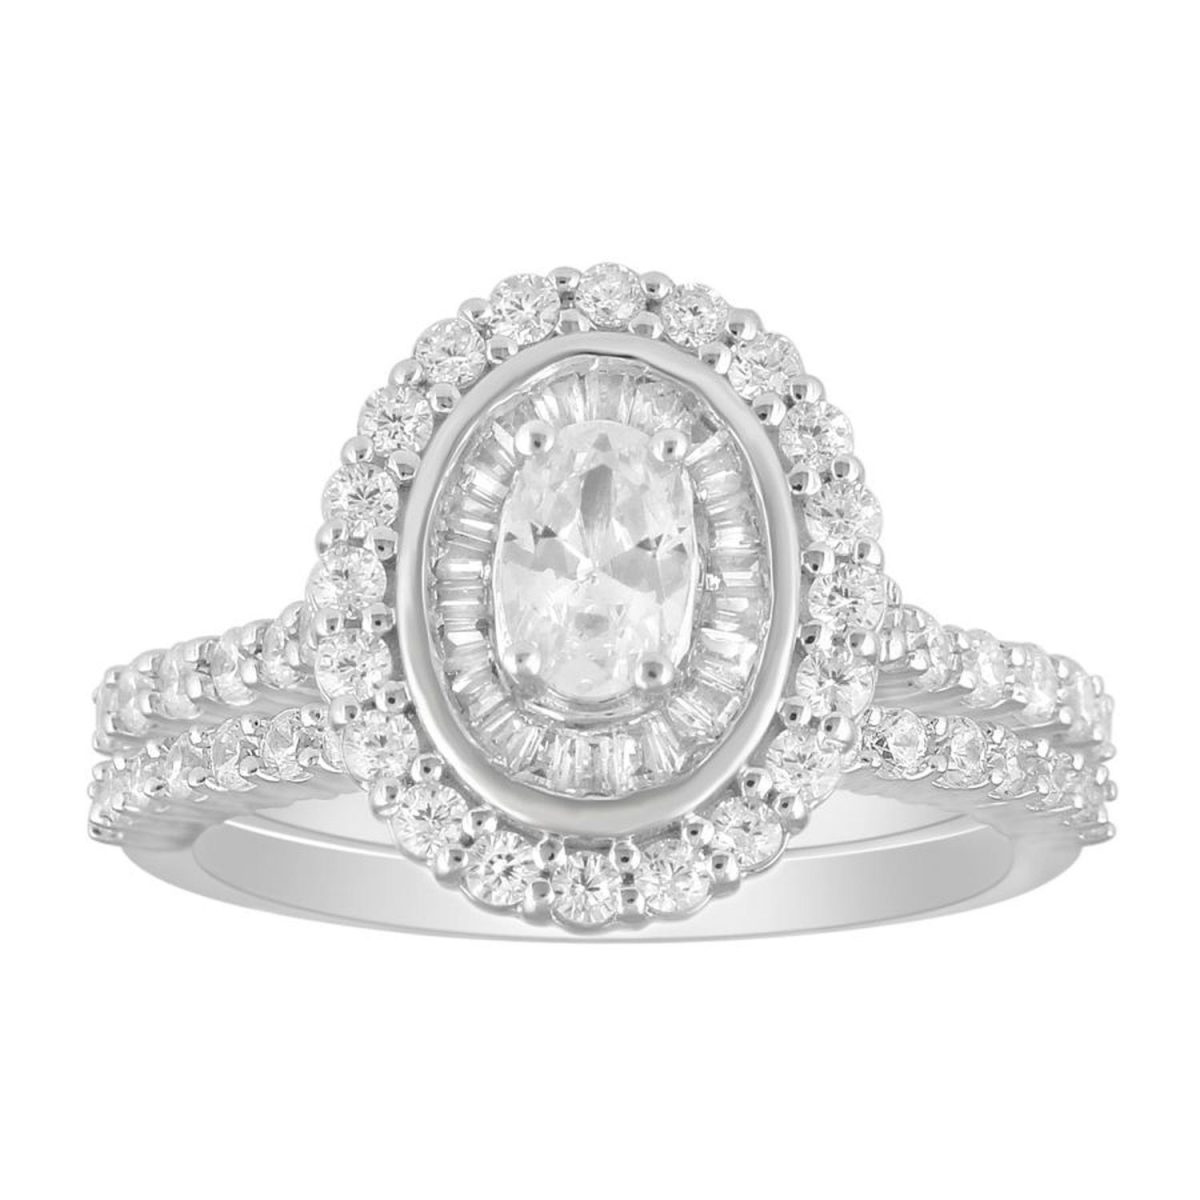 0015847 ladies bridal ring set 1 14 ct roundbaguette diamond 14k white gold